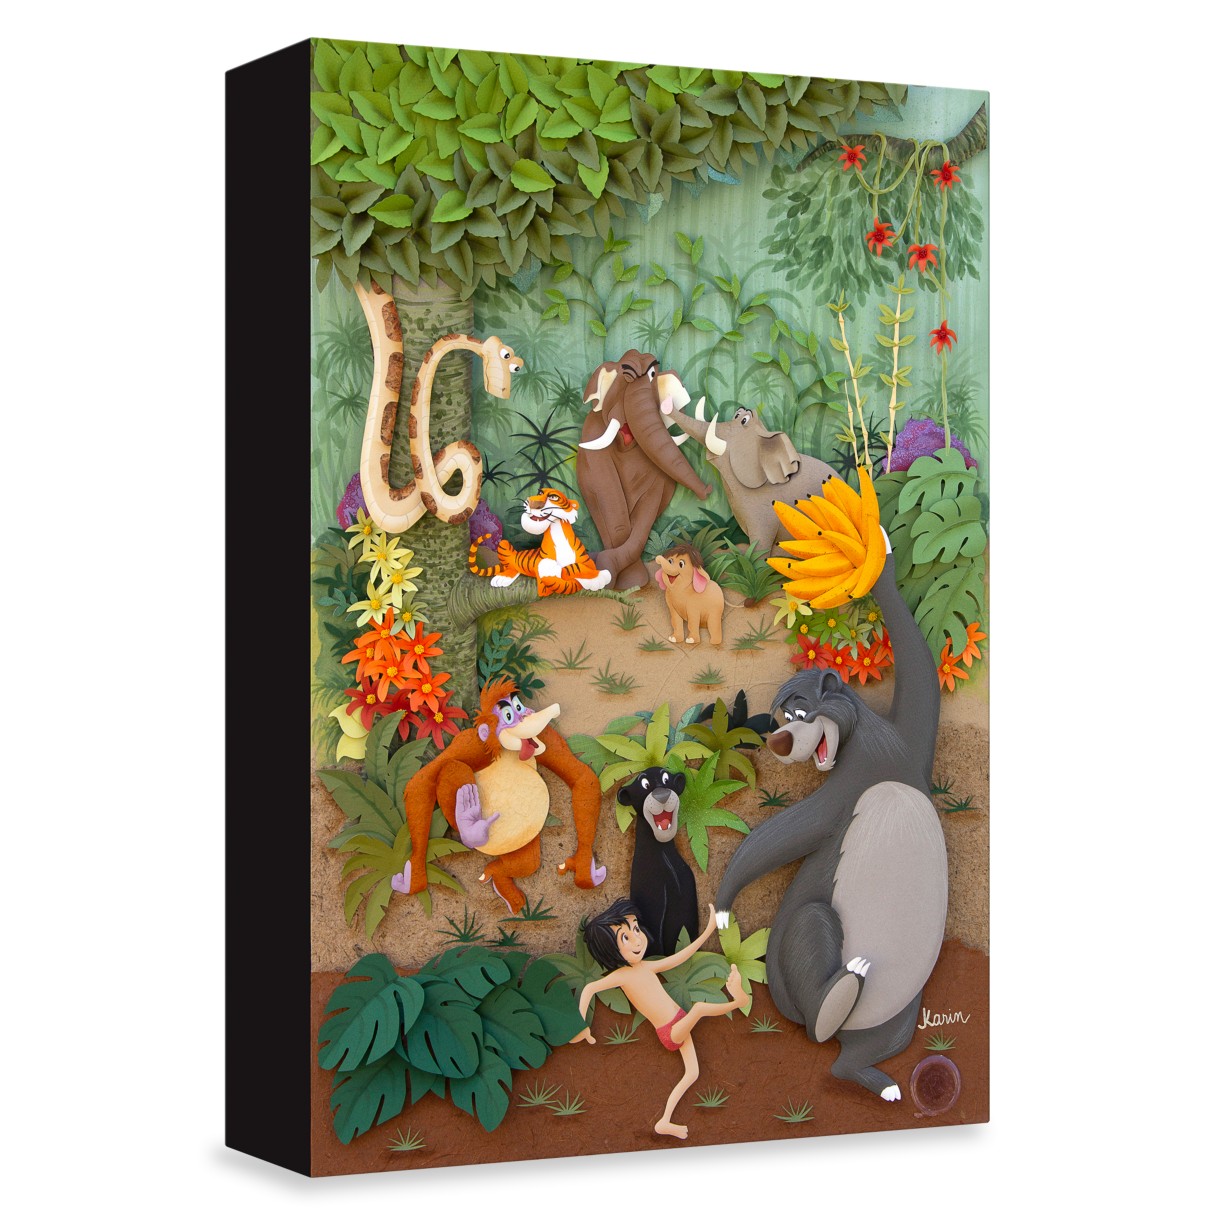 Jungle Book ''Jungle Jamboree'' Giclée on Canvas by Karin Arruda – Limited Edition